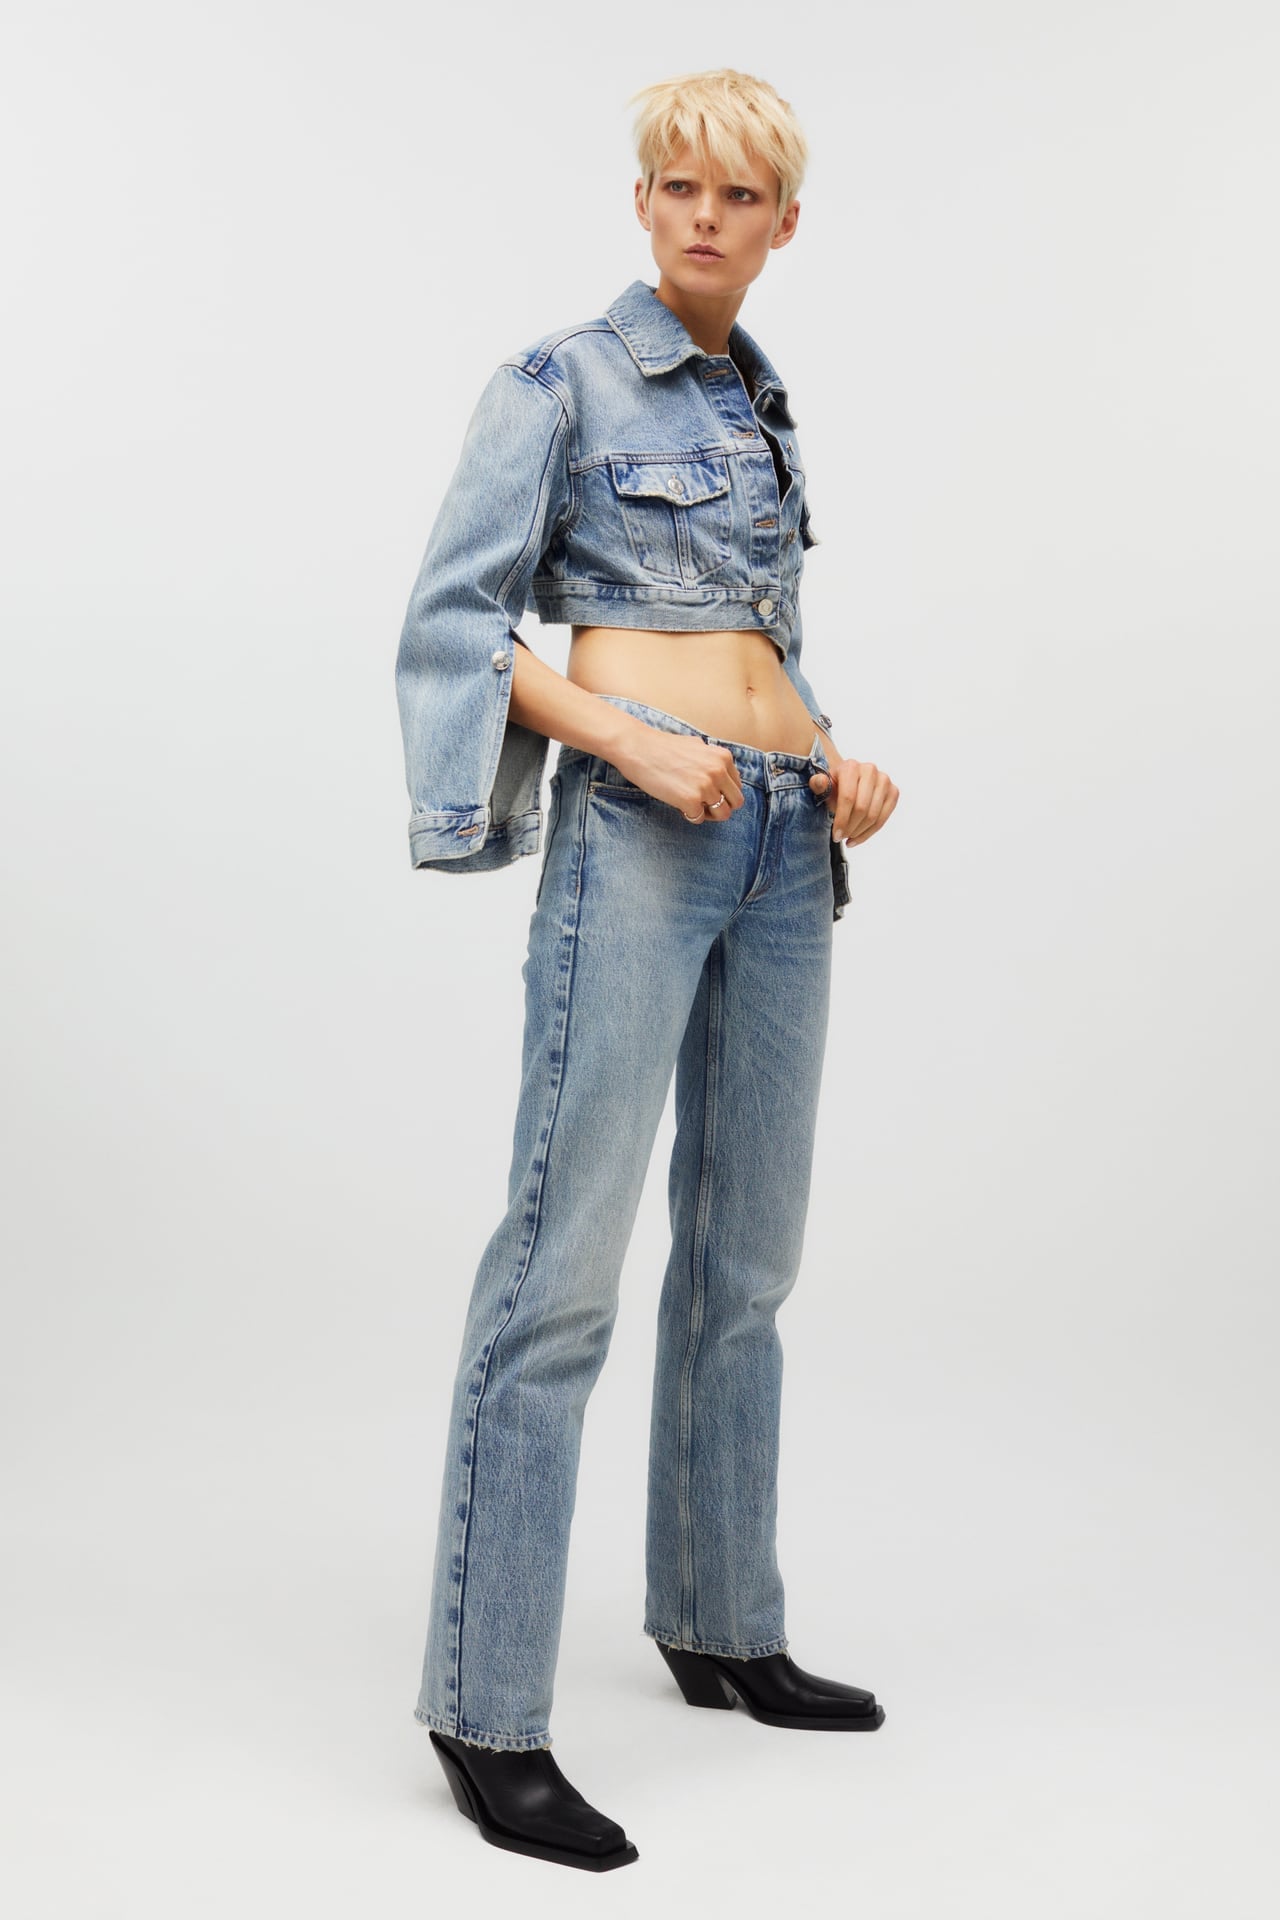 Kaia x Zara Straight Jeans and Denim Jacket | Kaia Has a New Capsule Collection With Zara | Fashion 18